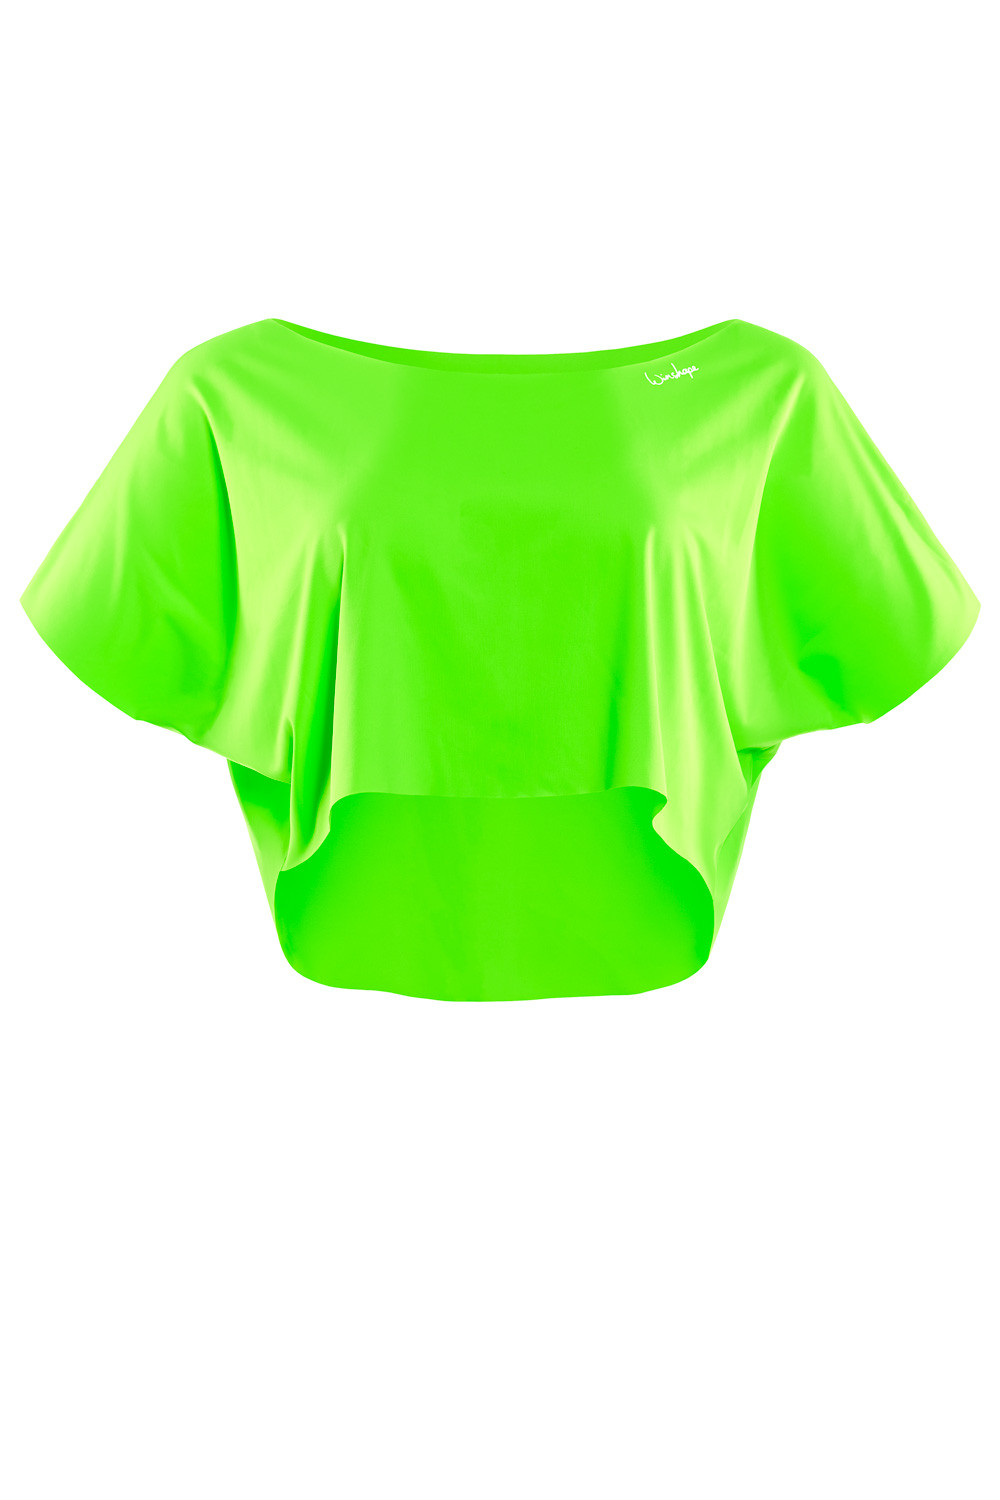 grün, Dance-Top Functional Light Dance Style Cropped DT104, Winshape neon